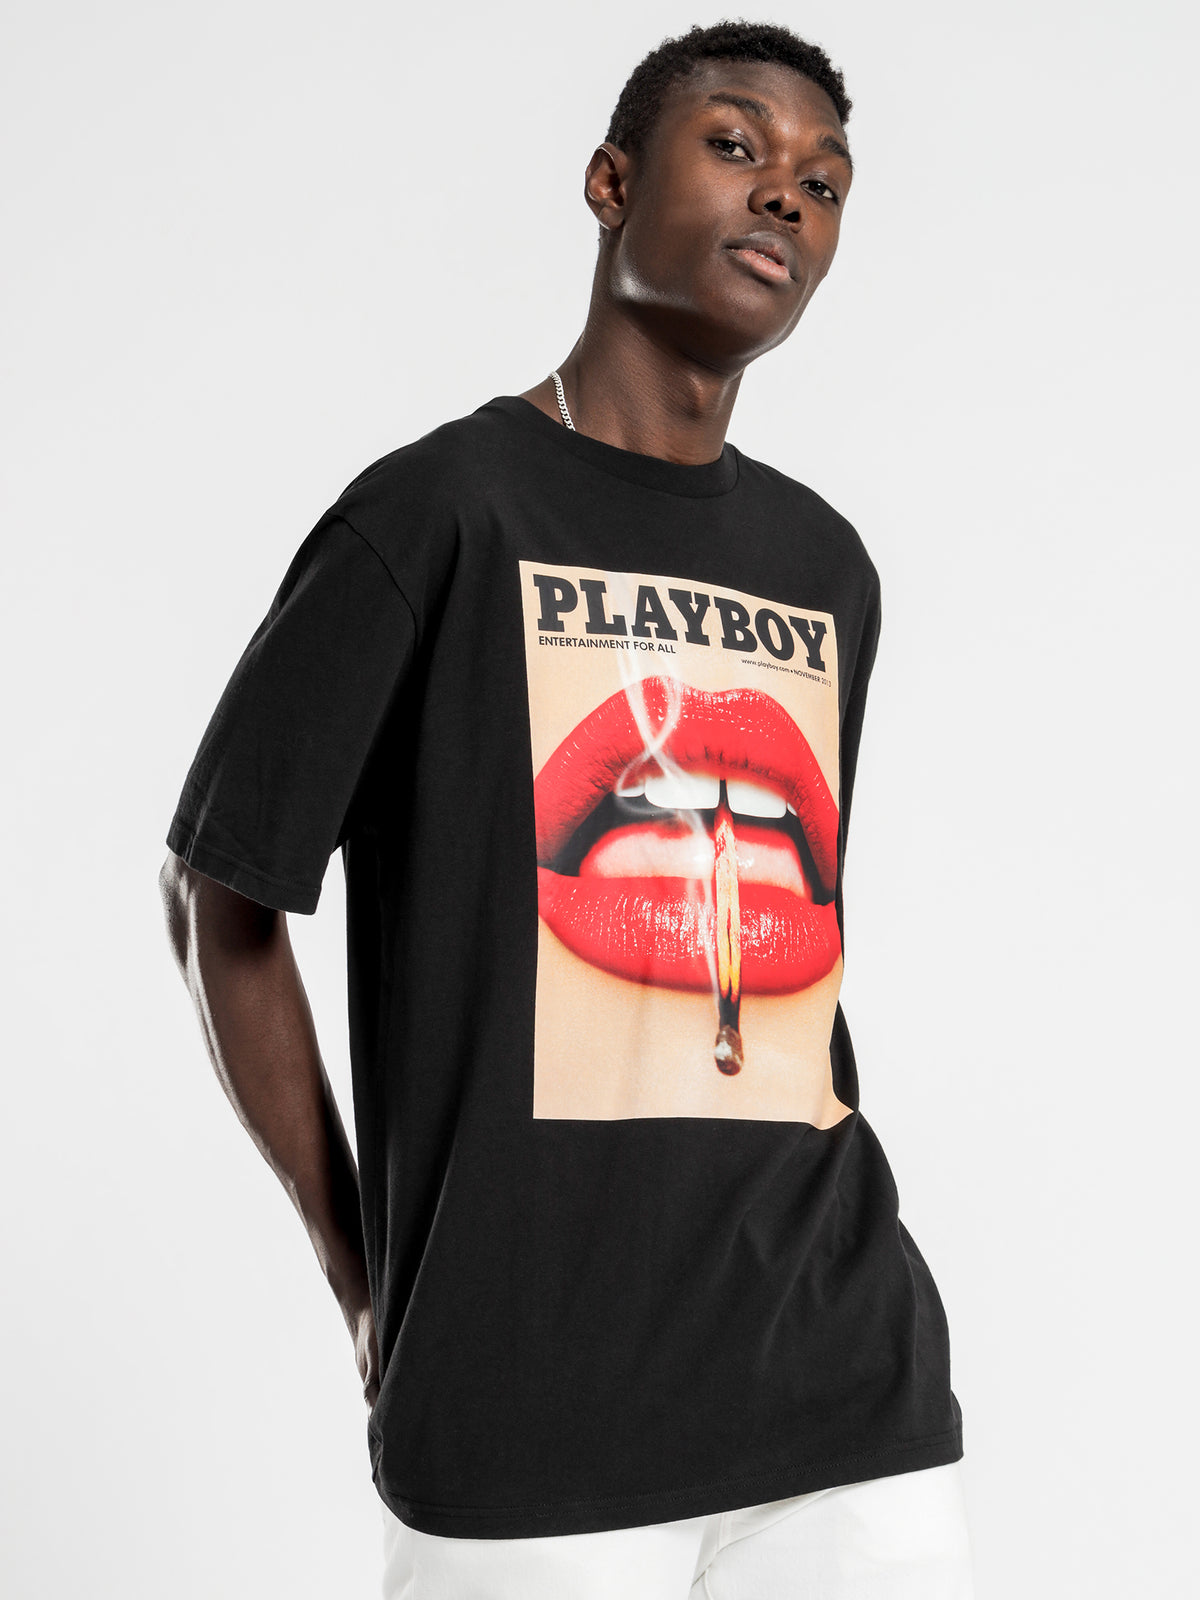 Playboy November 2013 T-Shirt in Black